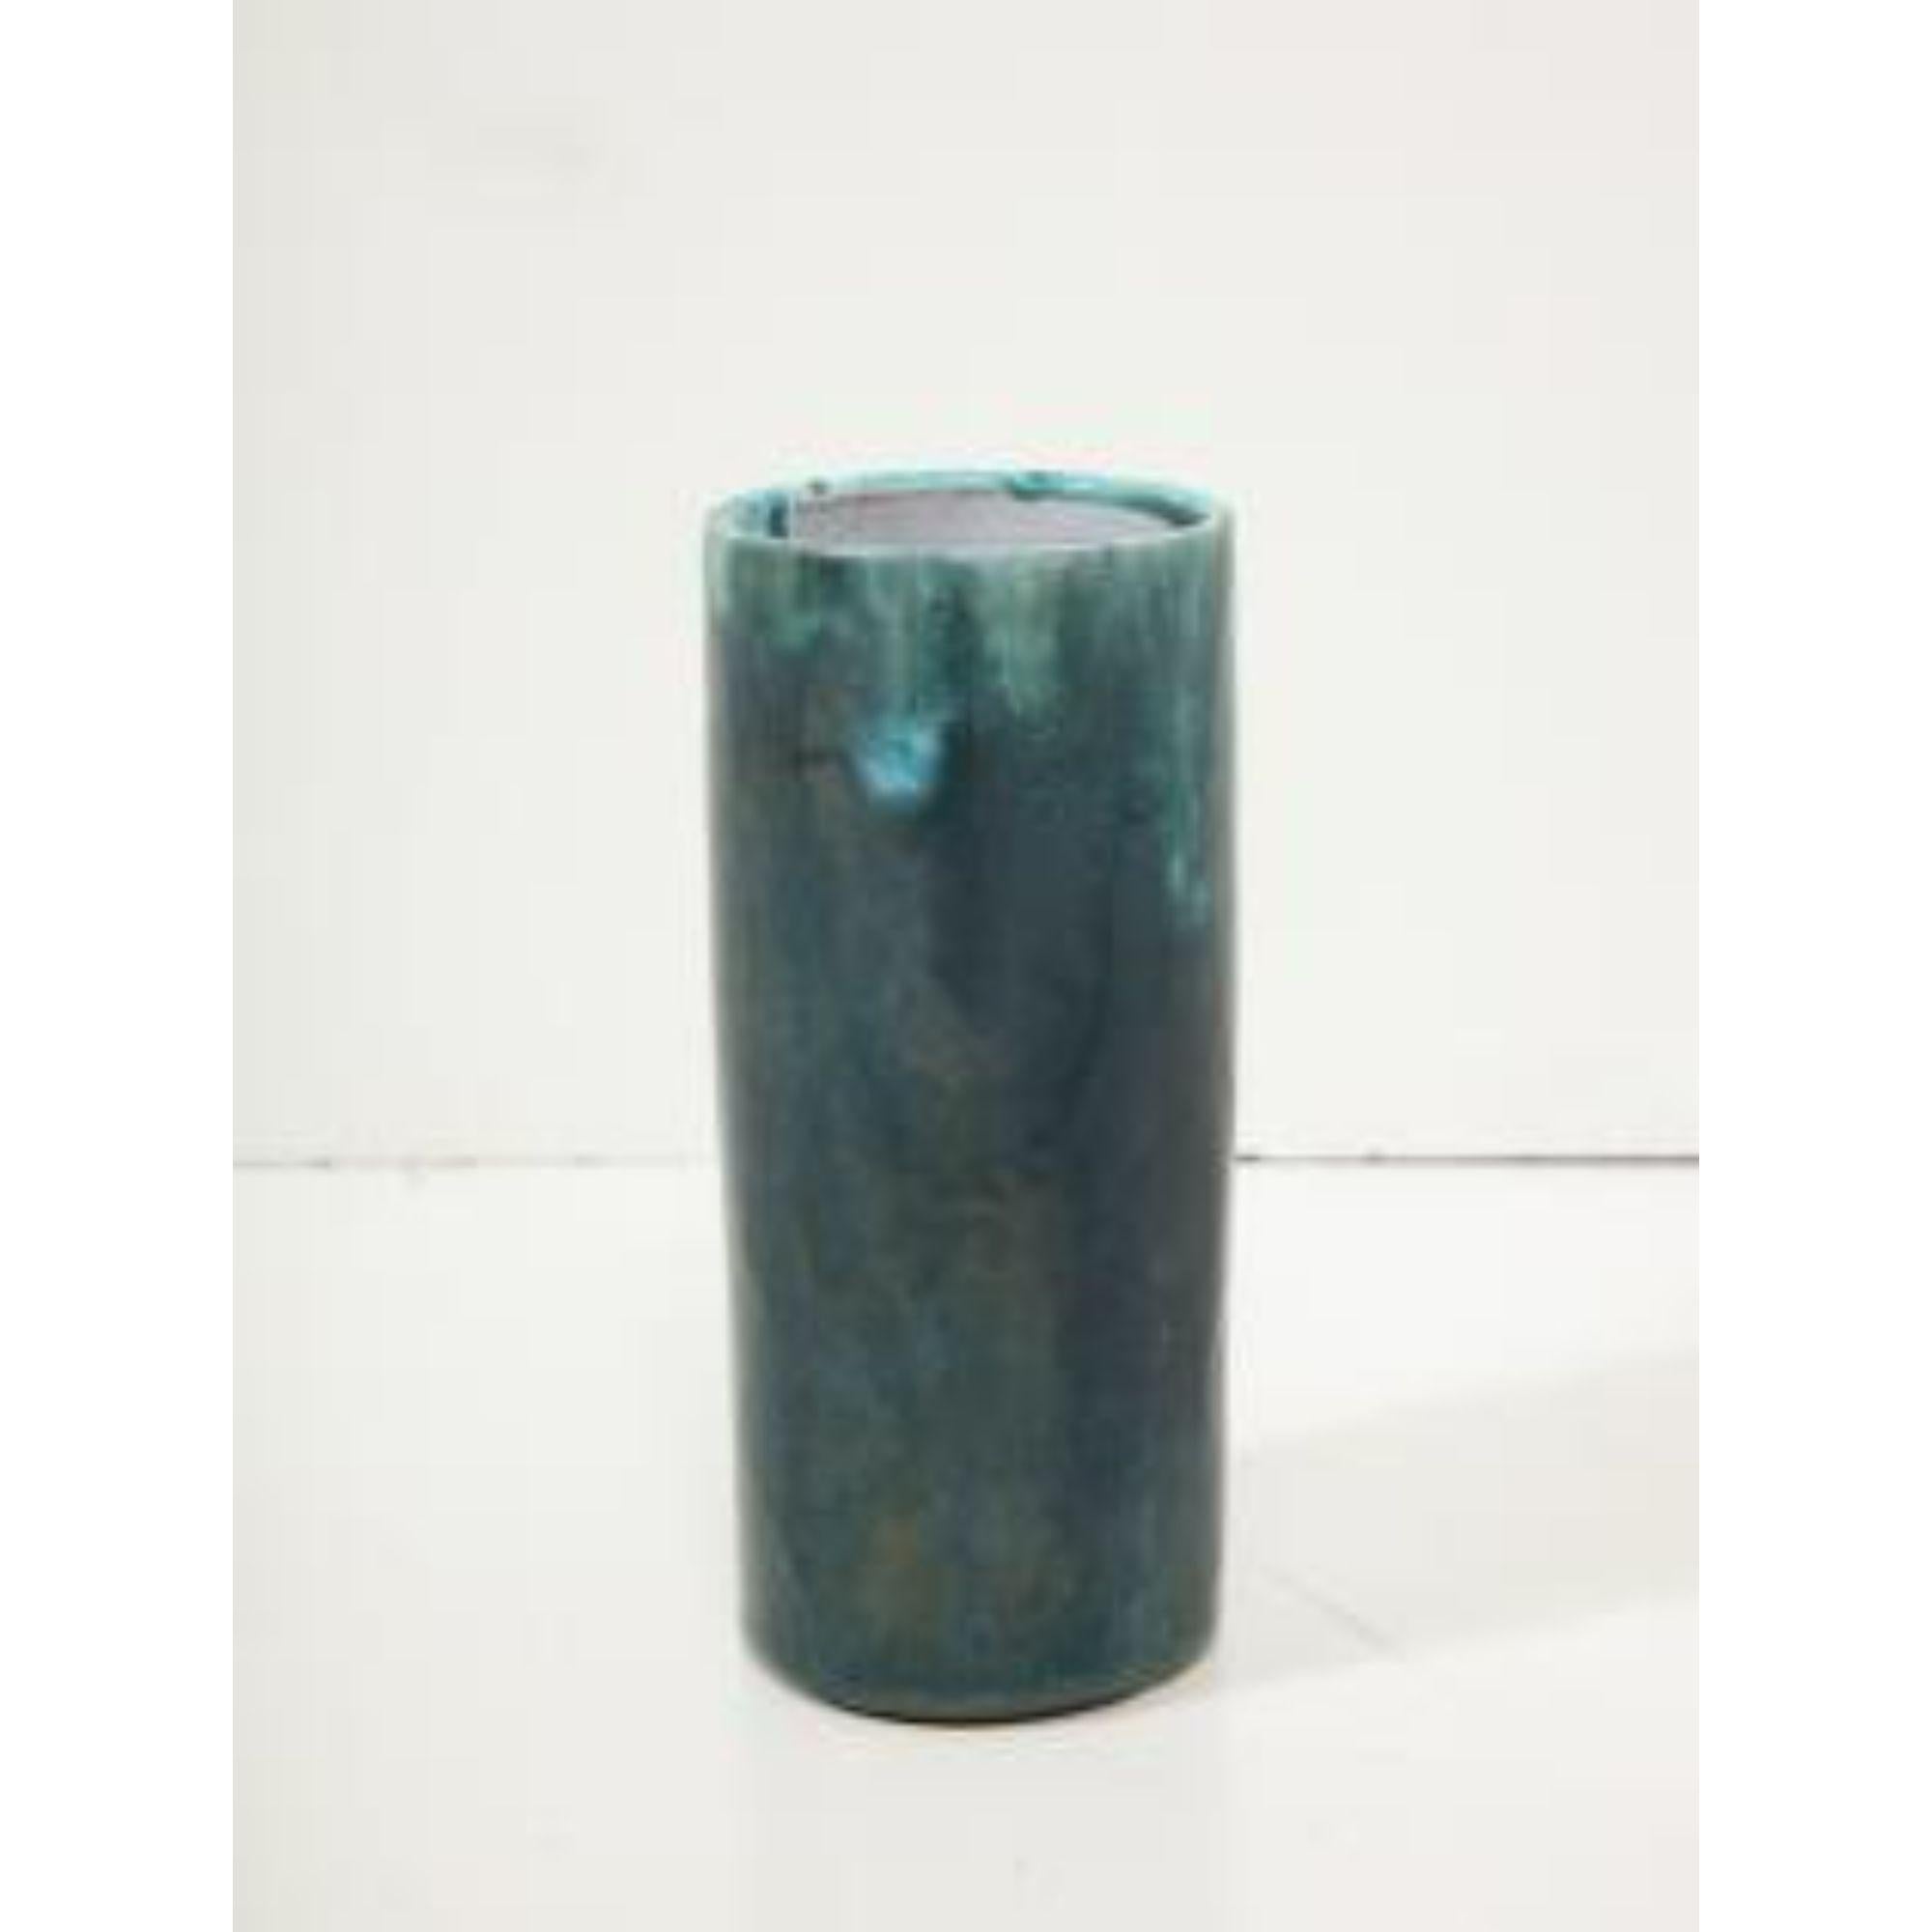 Sleek studio vase created in the storied ceramics community of Biot, France.

